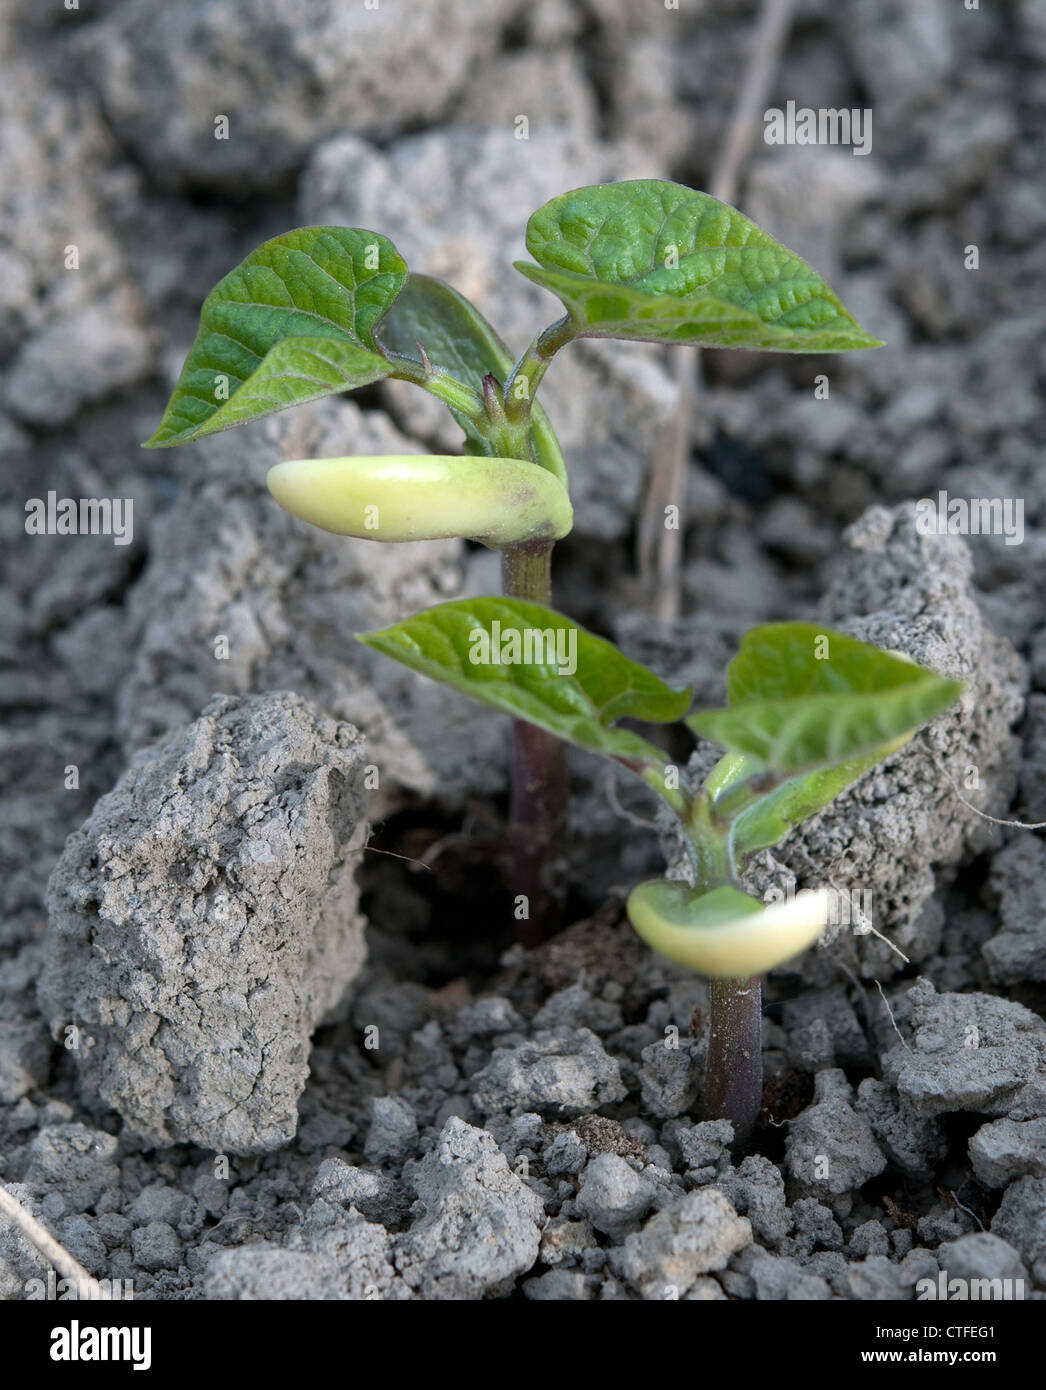 plant of kidney bean Stock Photo